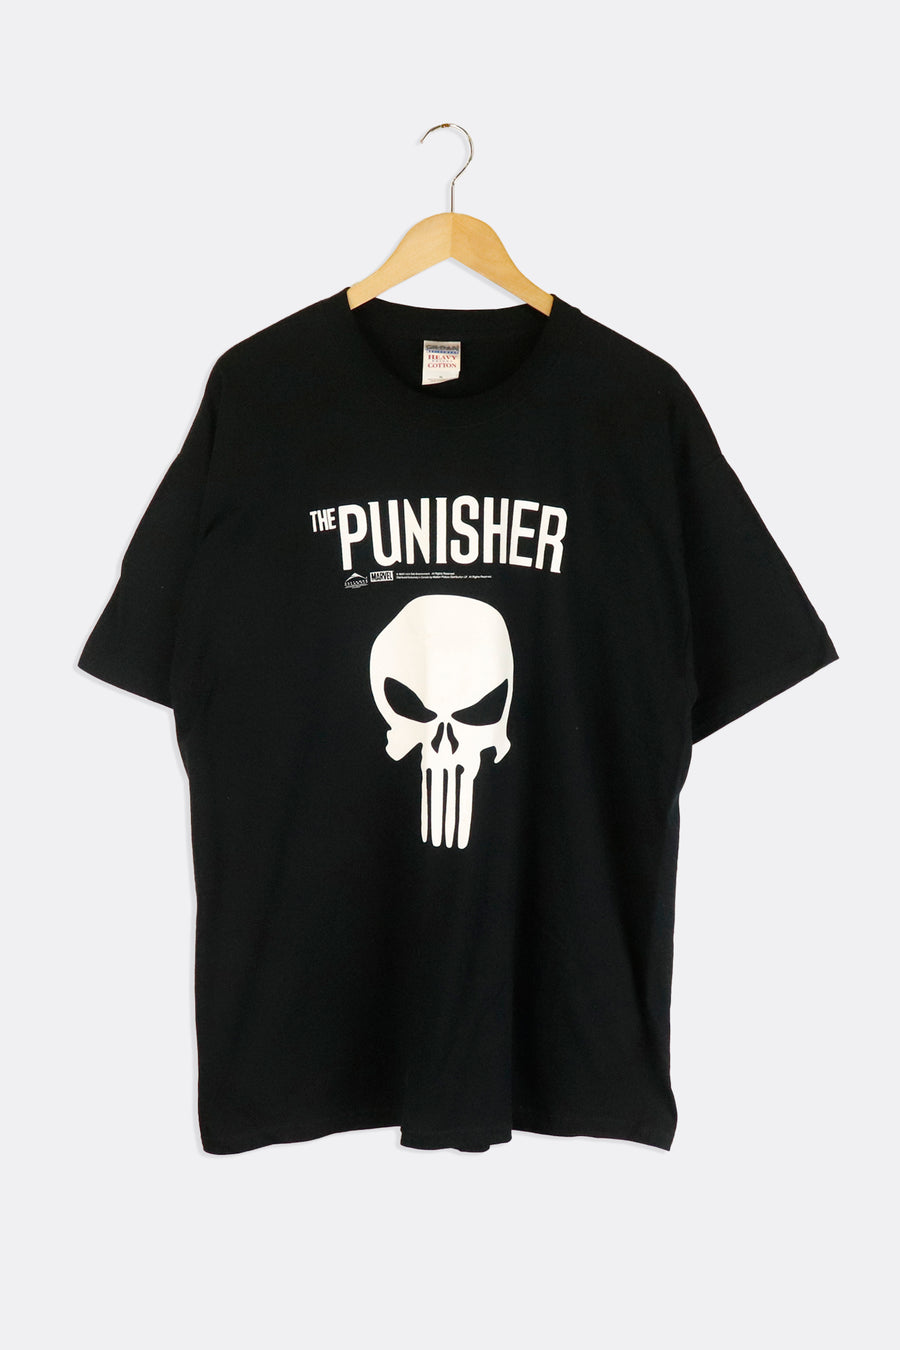 Vintage Marvel The Punisher Vinyl Logo And Font T Shirt Sz XL